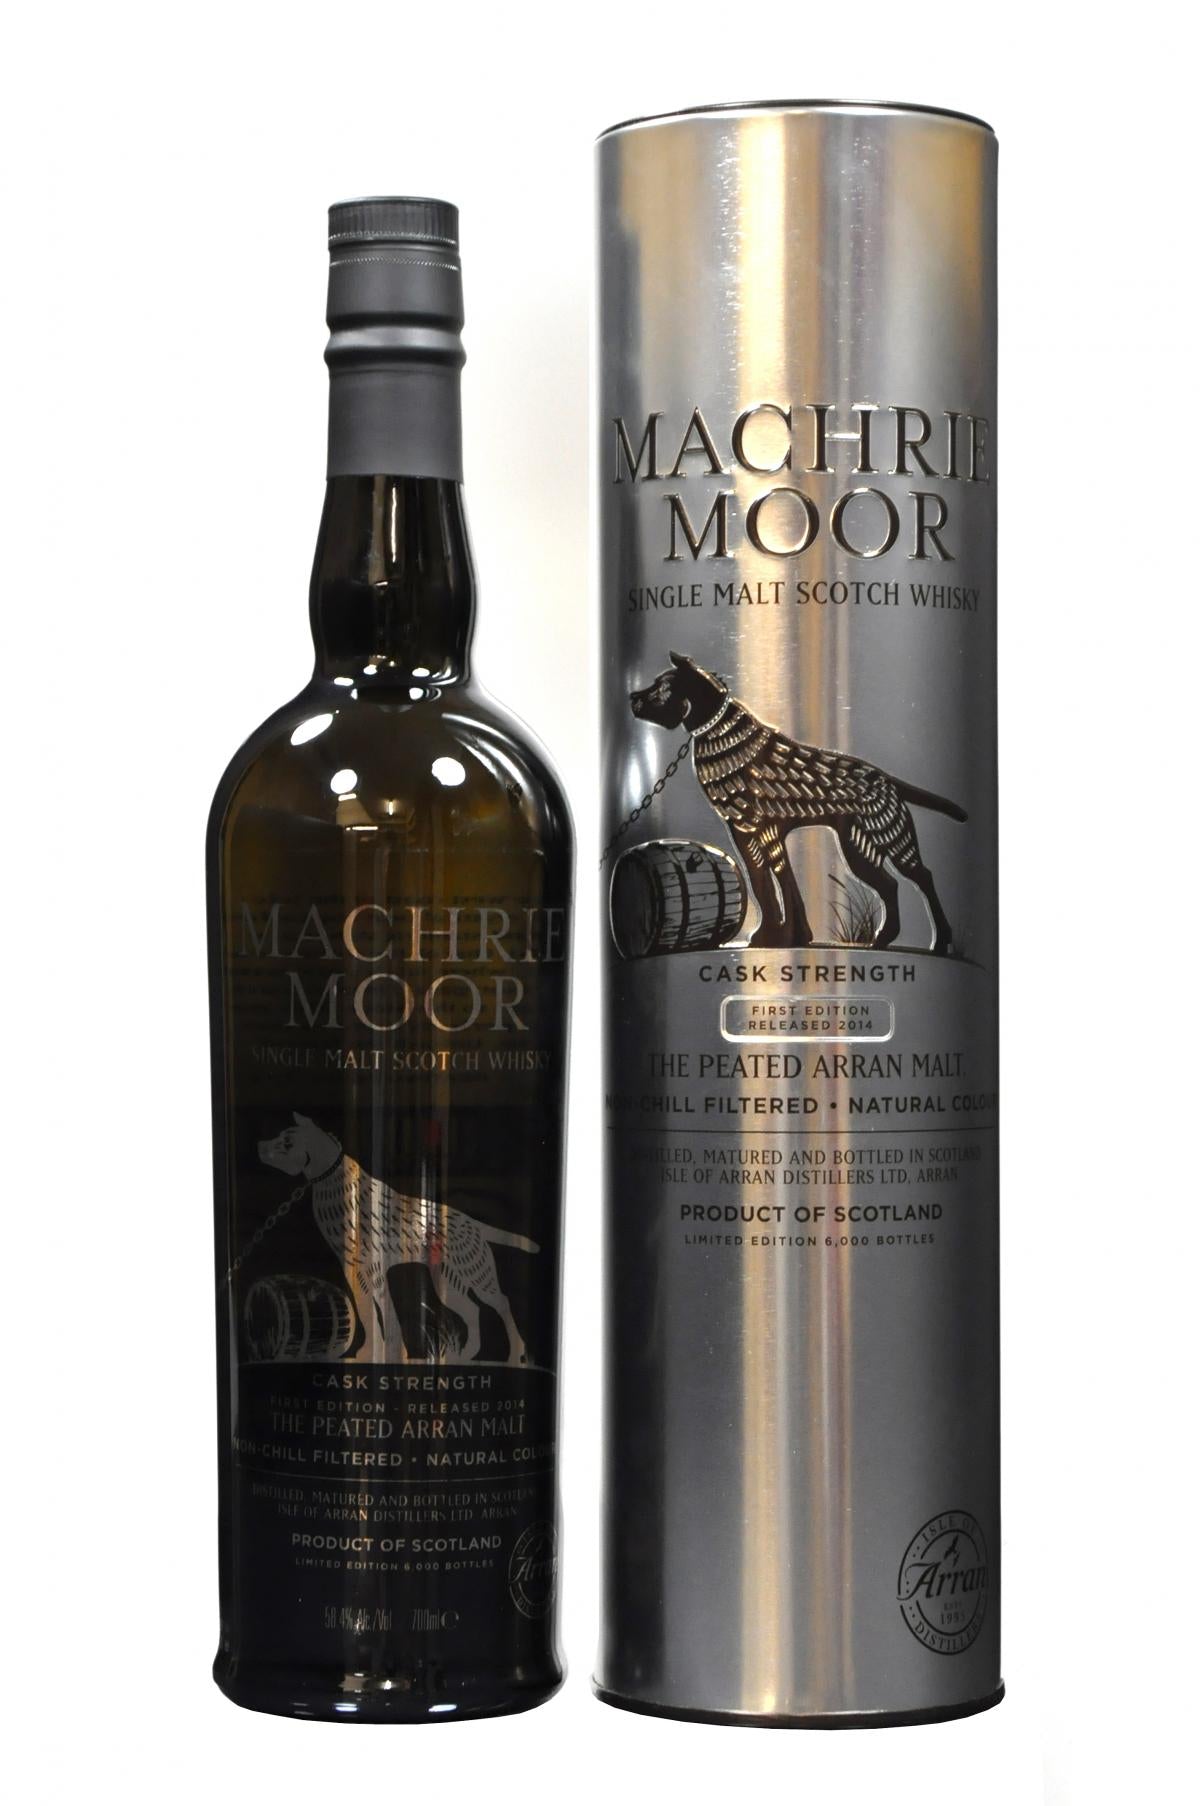 arran machrie moor, cask strength, first edition release 2014, single malt scotch whisky